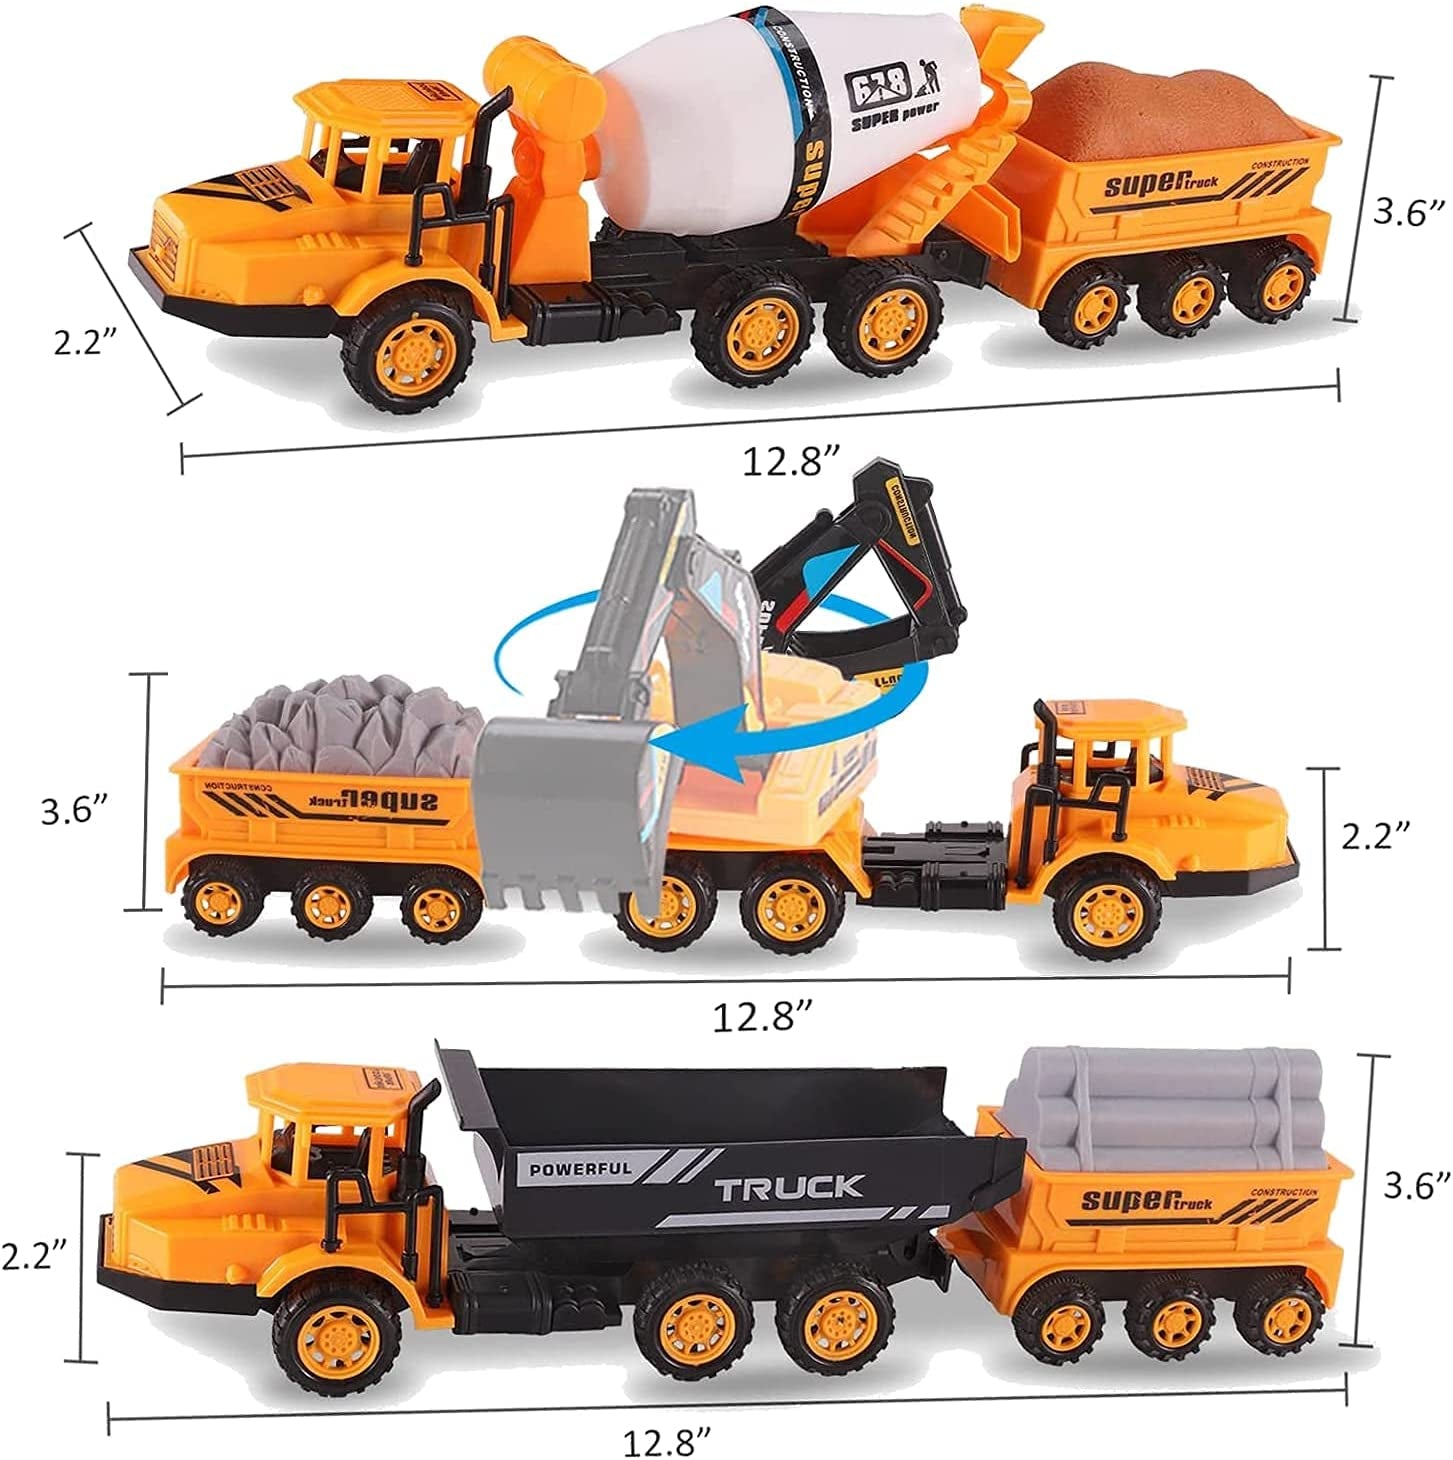 Big Rig Construction Tow Trucks W/ Trailers Toy Cargo Transport Vehicles Playset - Kids Hauler Play Set W/ Dump Truck, Cement Mixer, Excavator (3 Pack)